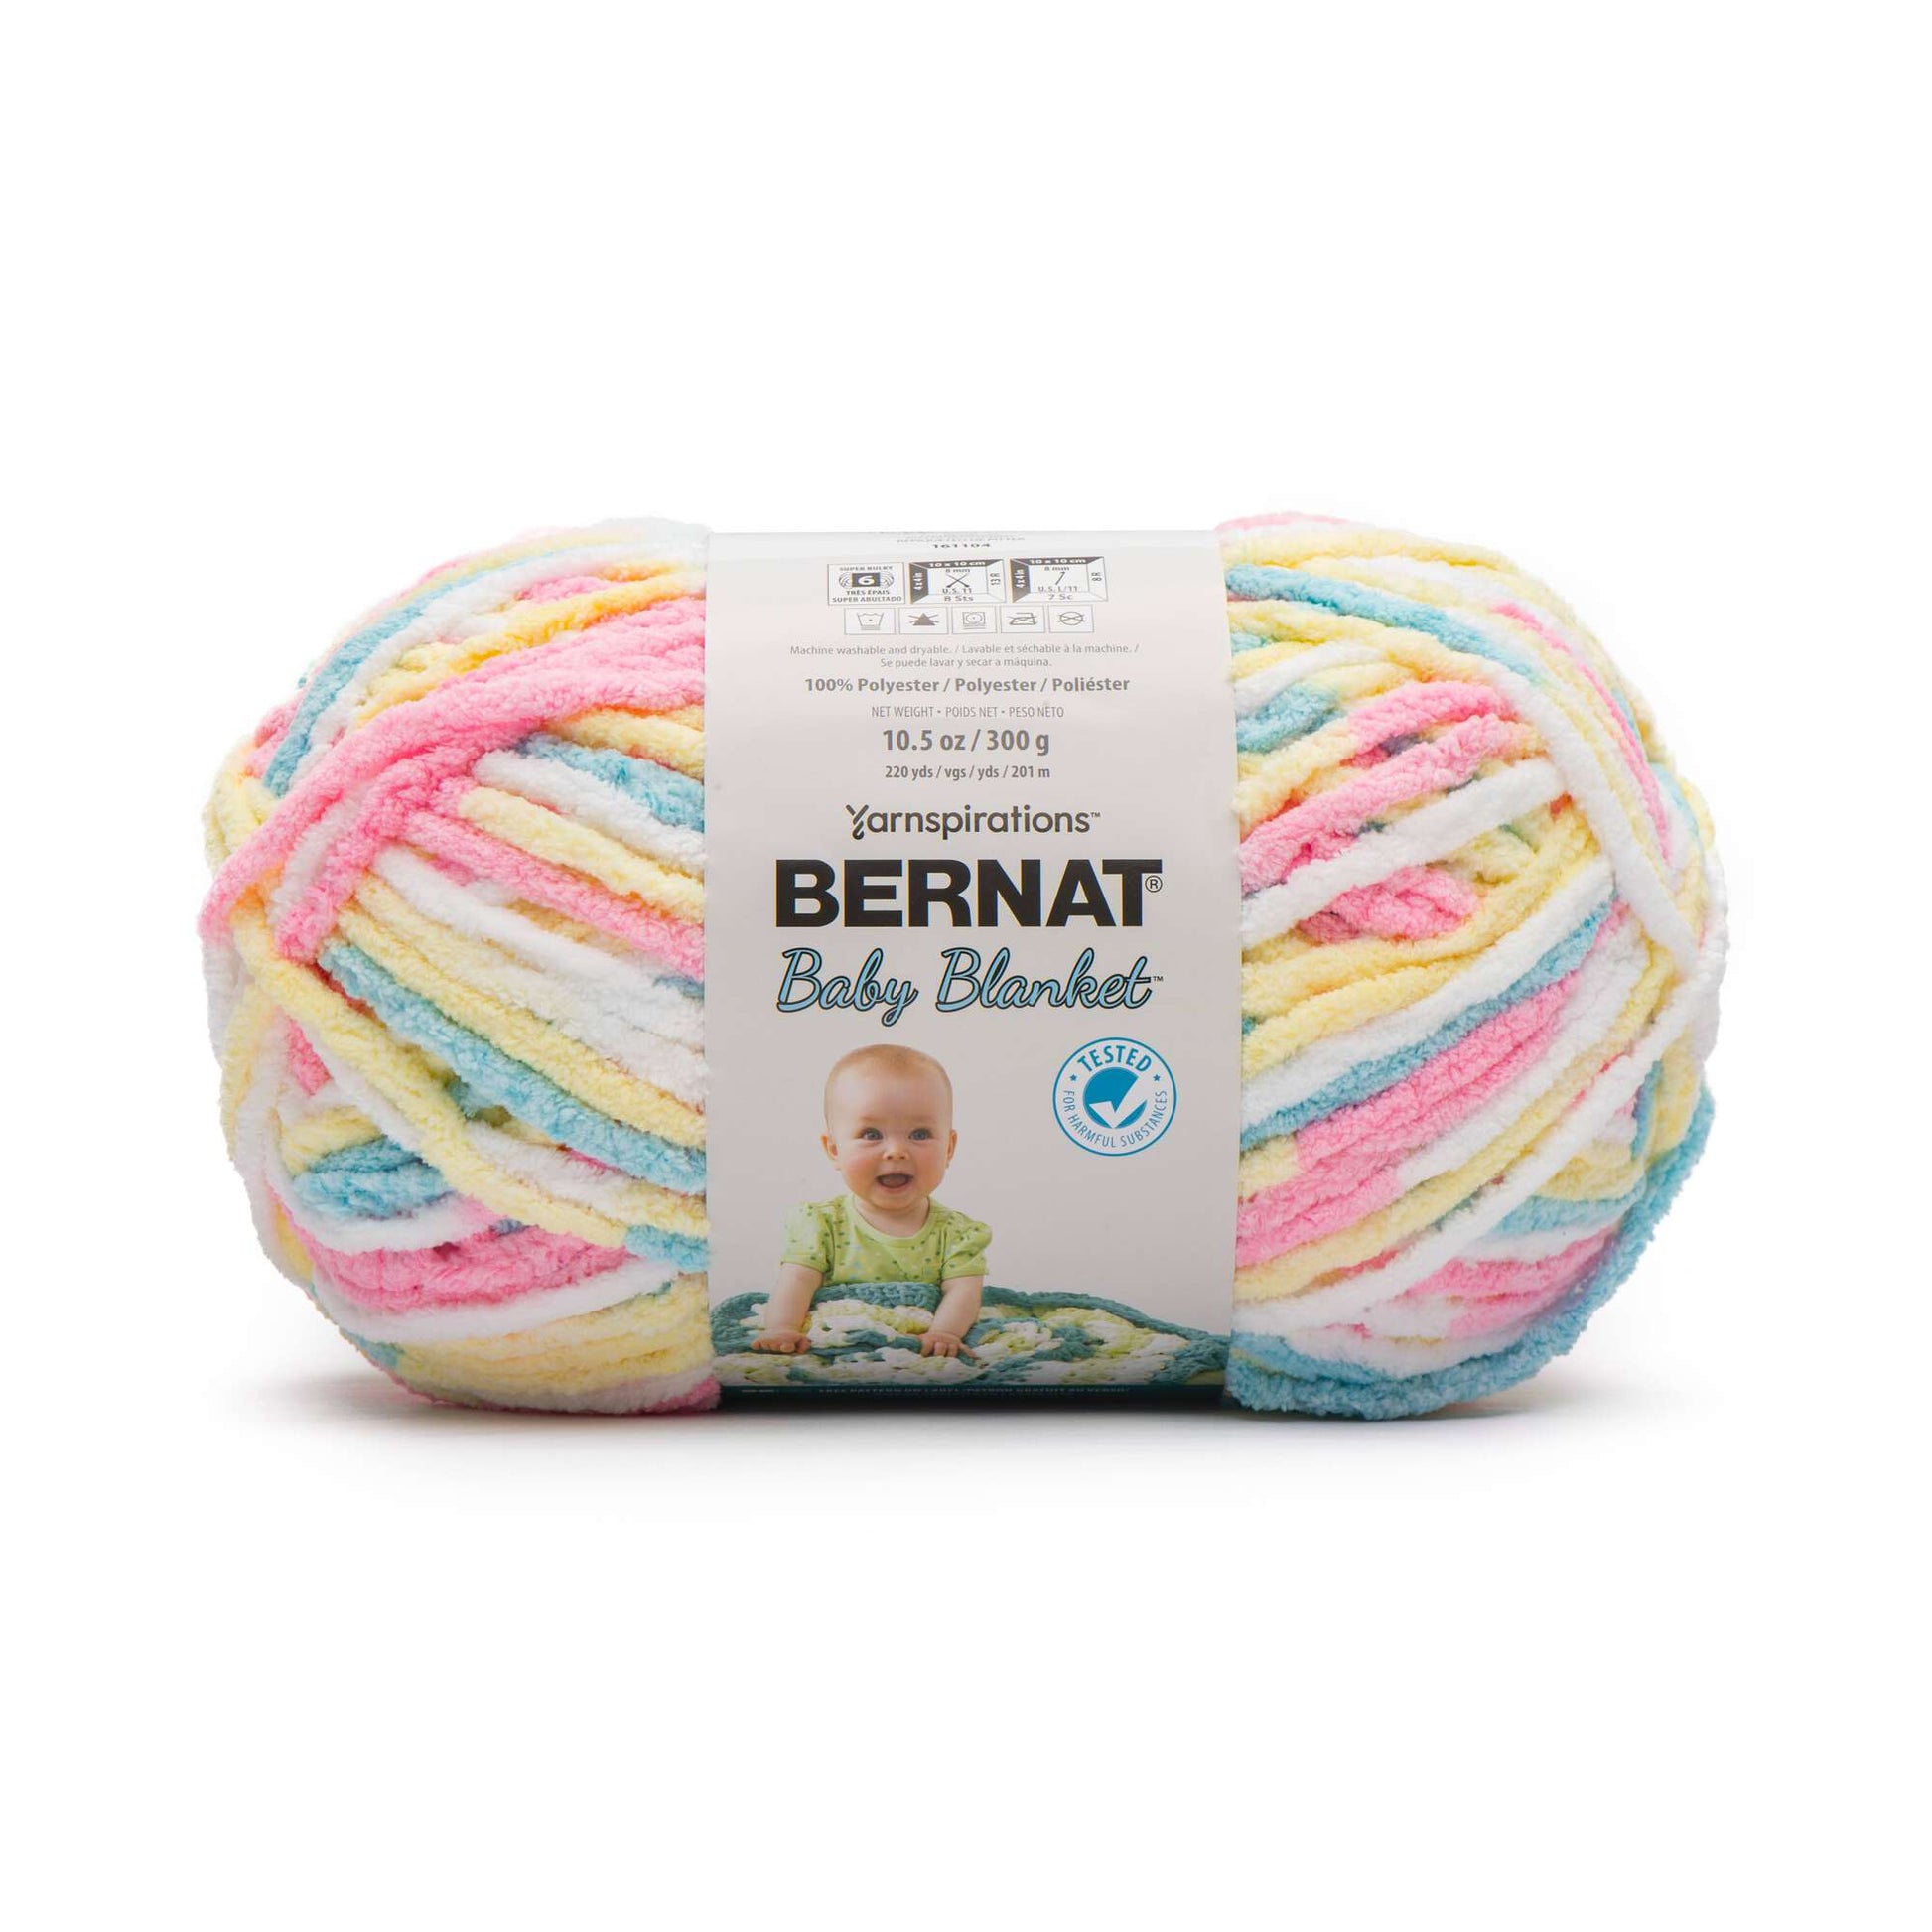 Bernat Baby Blanket, Knitting Yarn & Wool